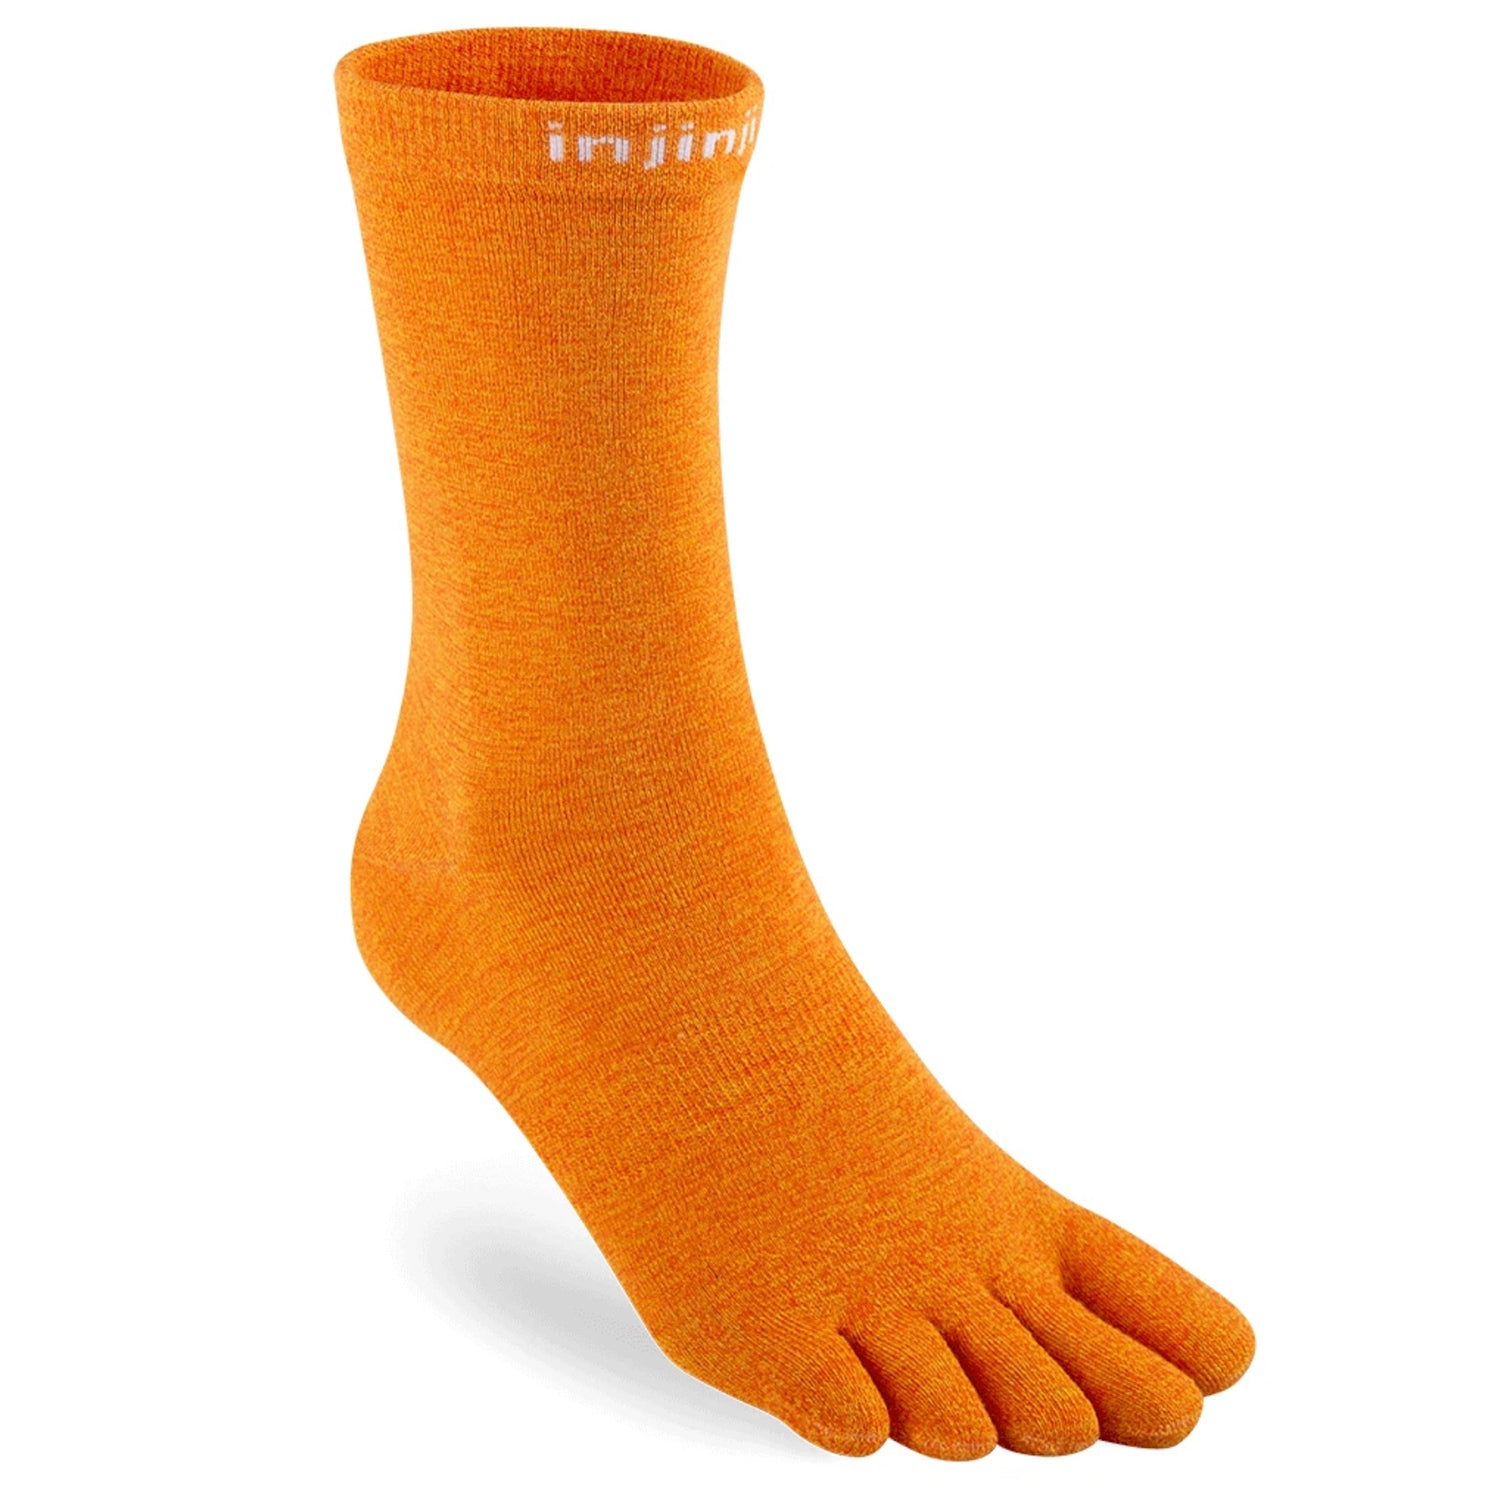 Injinji Liners - Orange